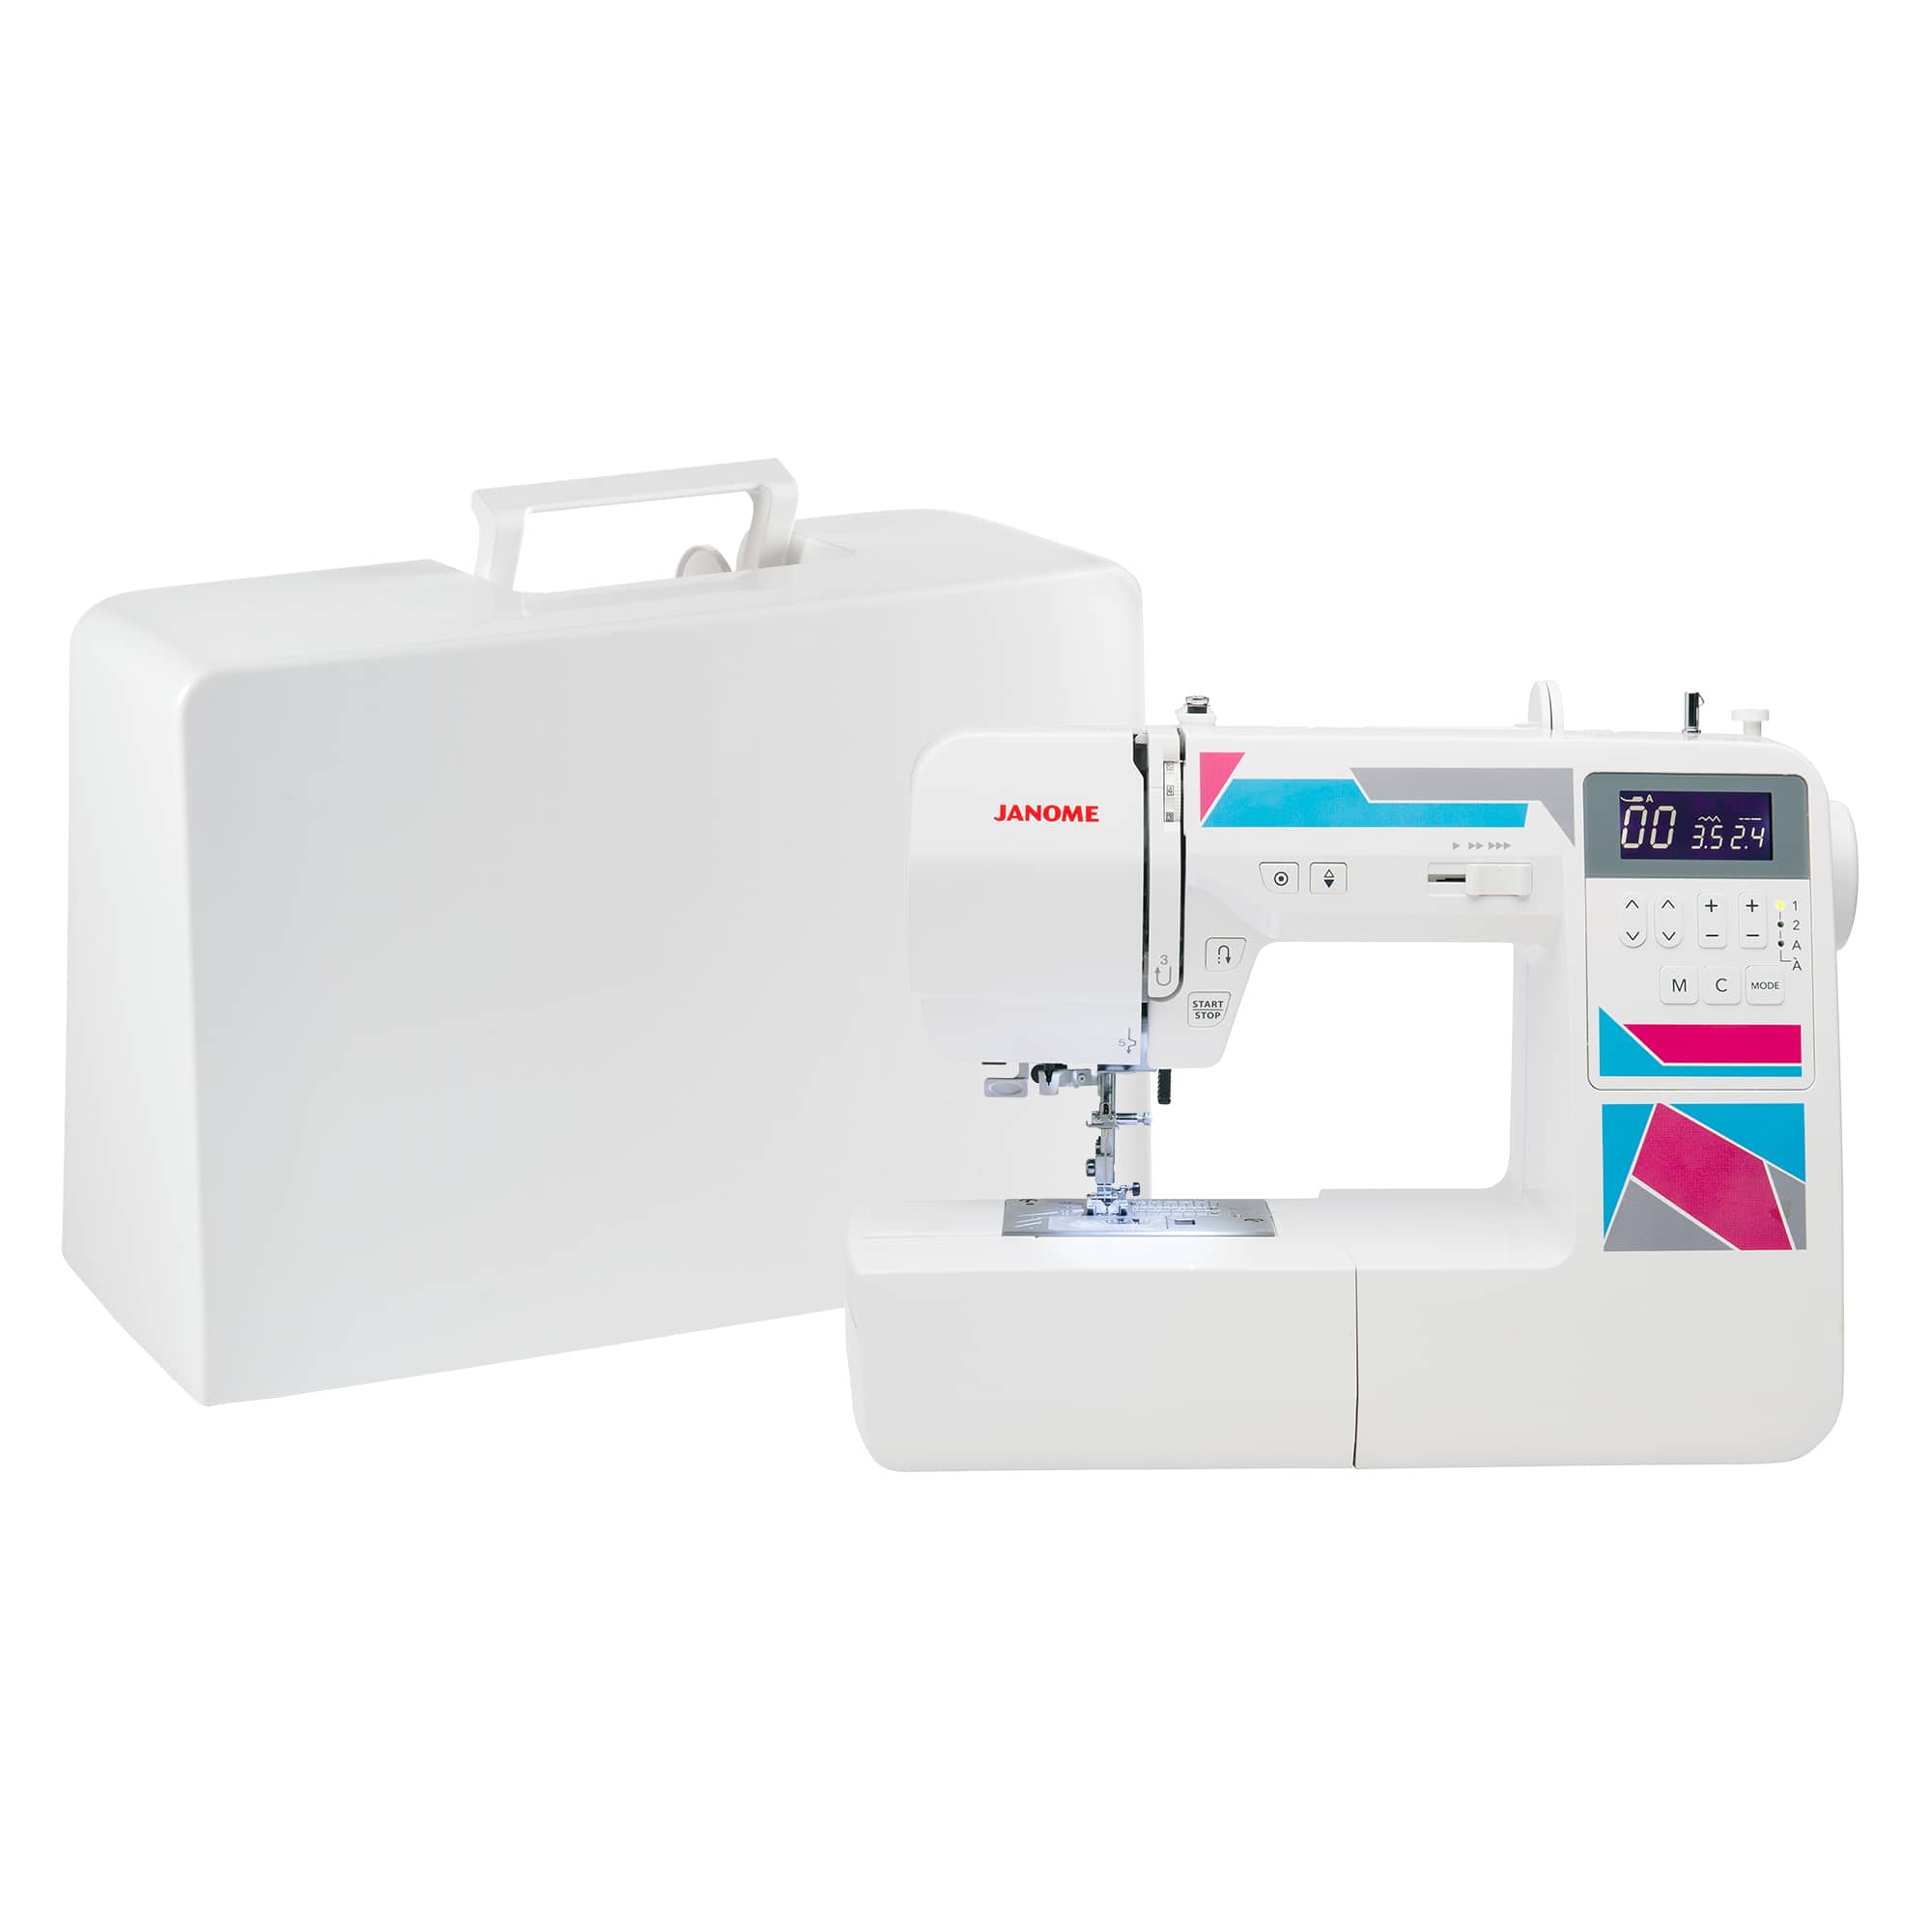 Handheld Sewing Machine by Loops & Threads®